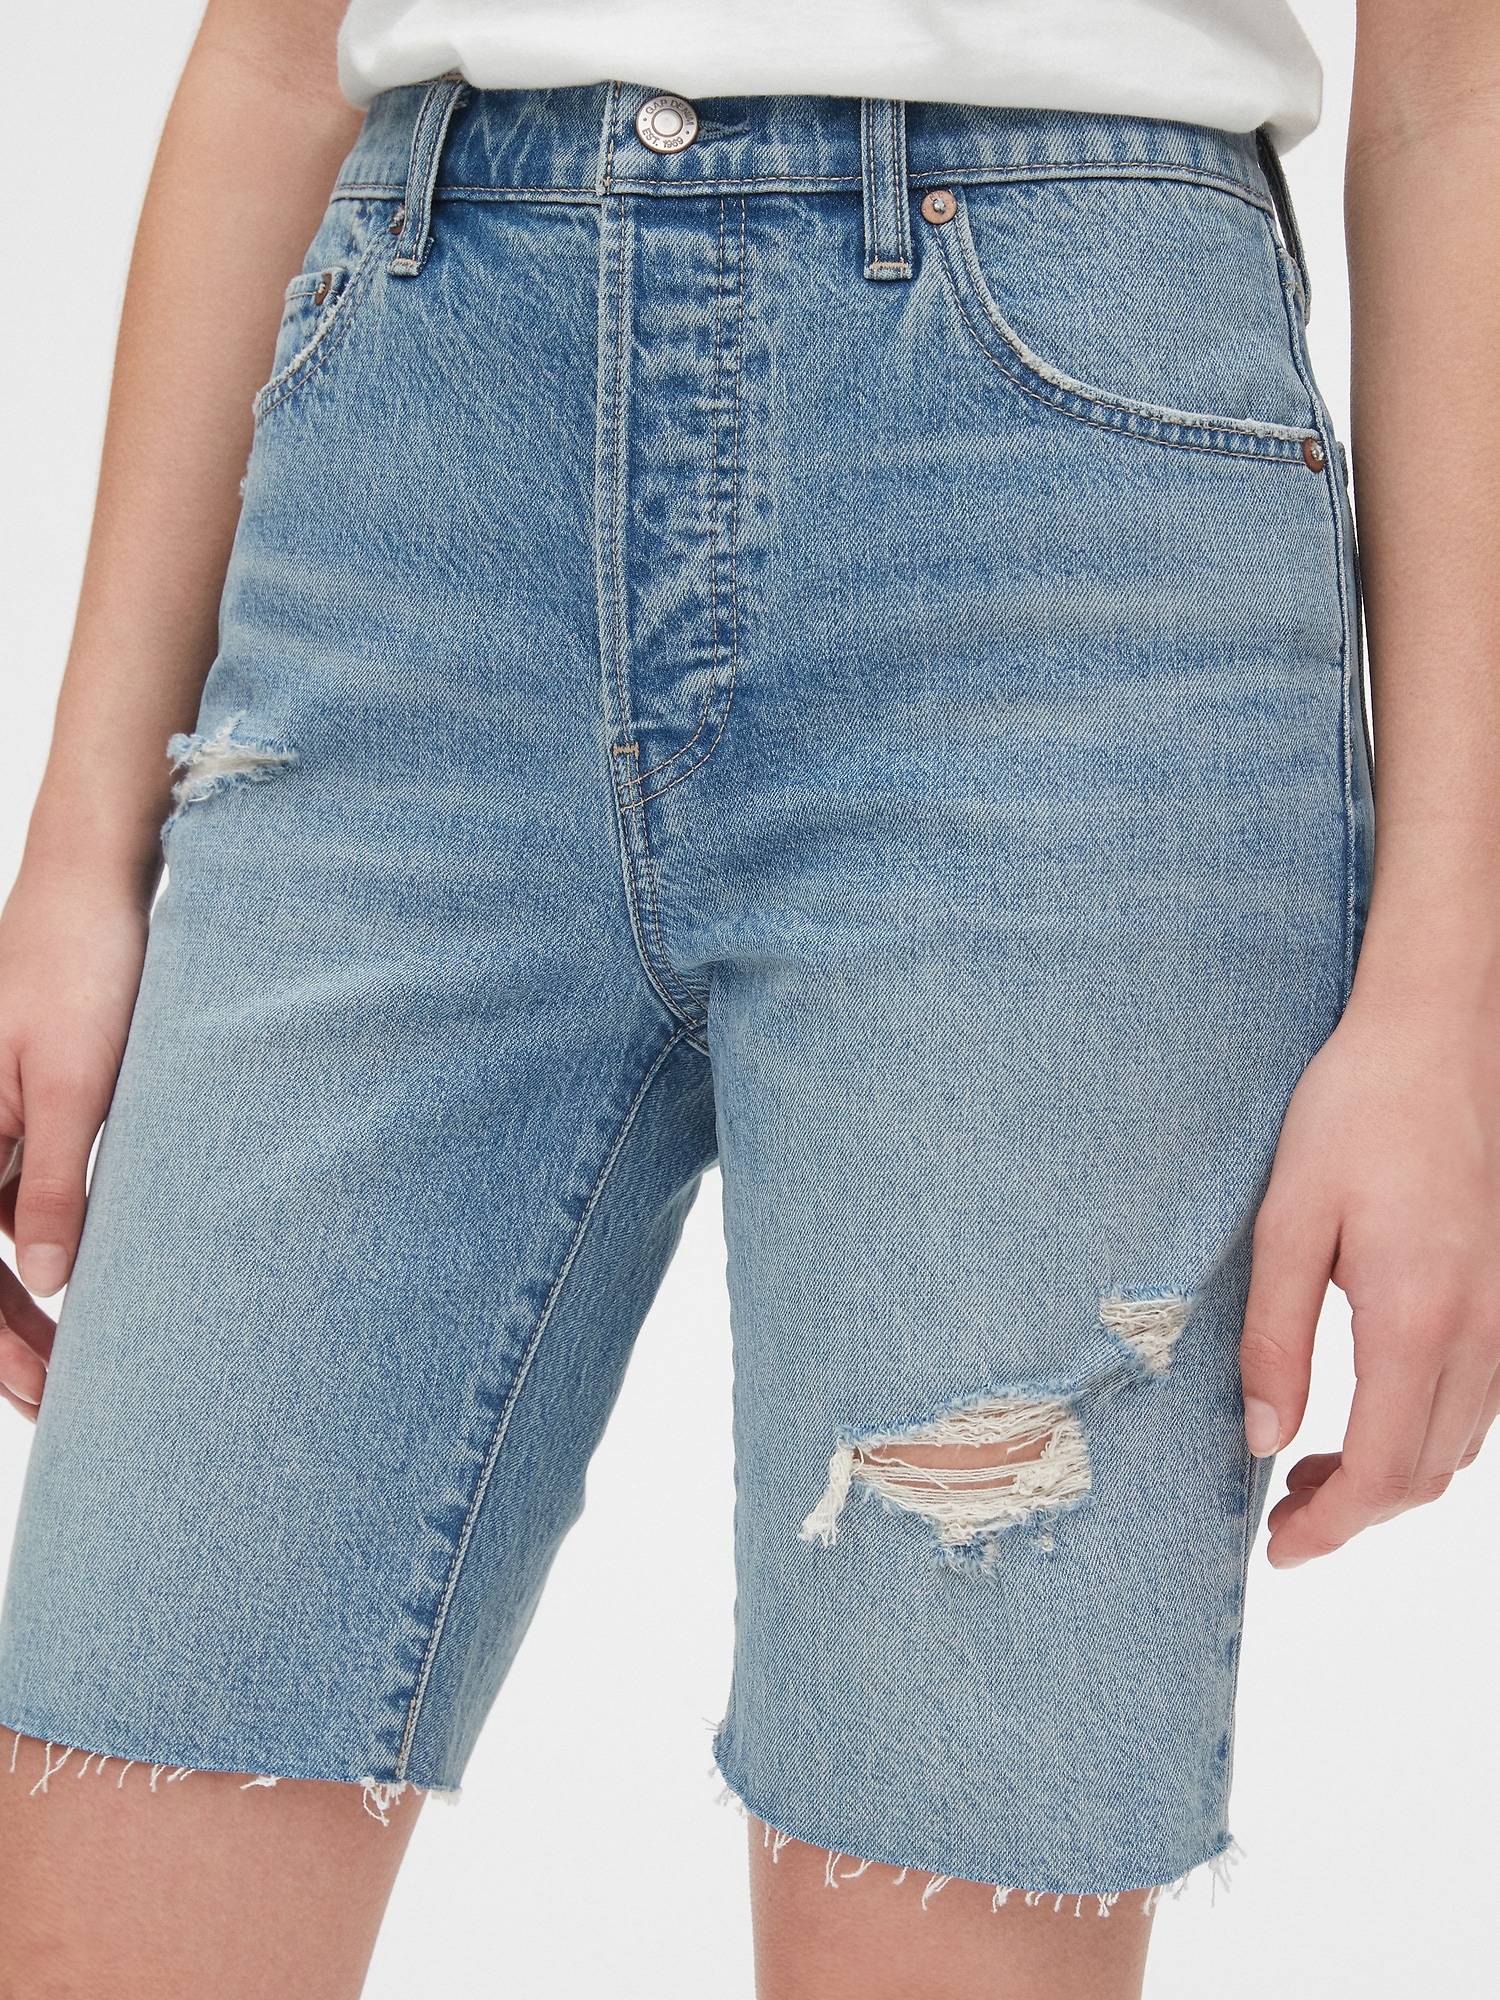 distressed denim jean shorts